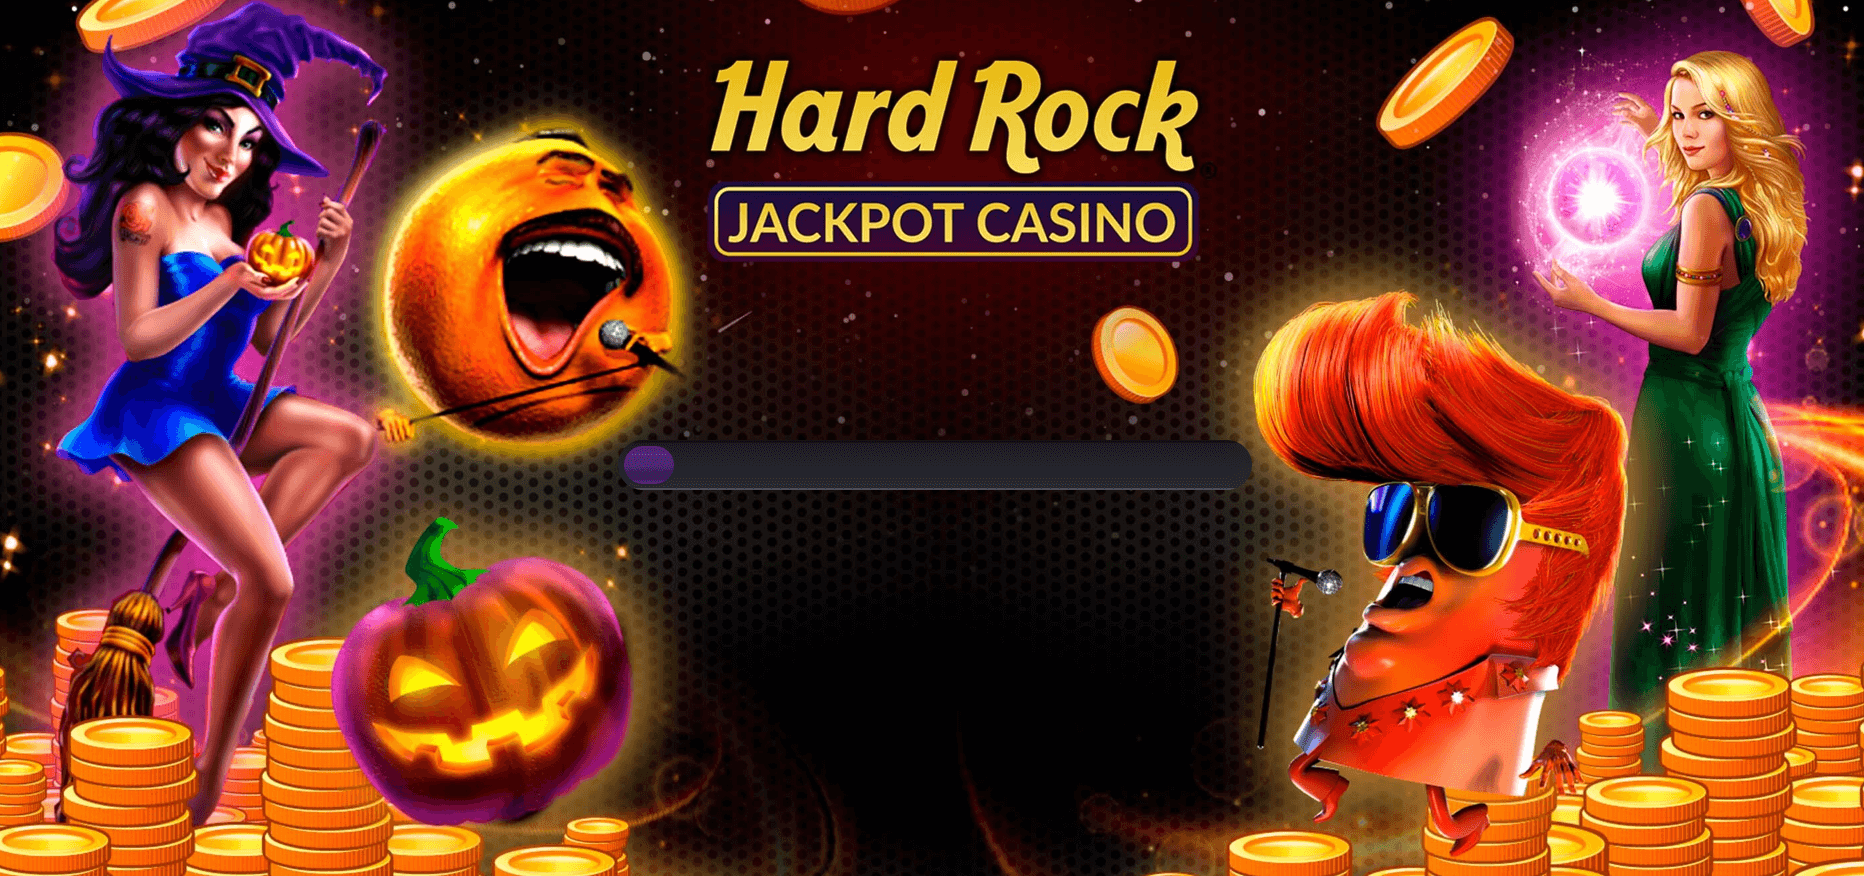 Hard Rock Jackpot Site